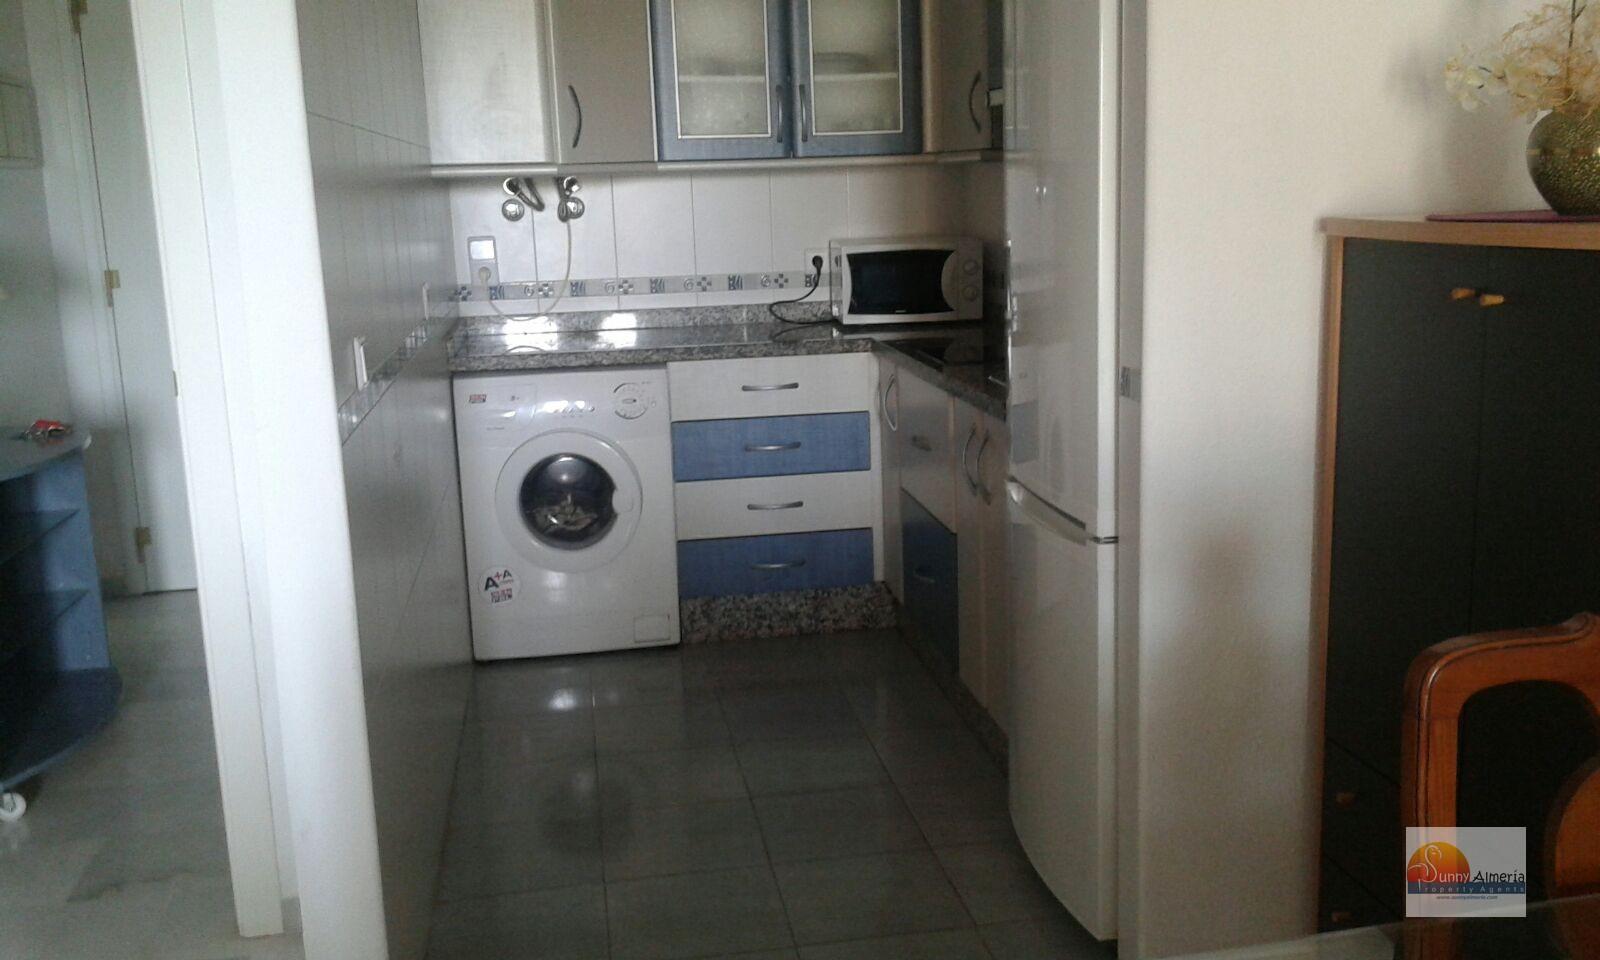 Apartment for rent in calle aviacion 0 (Roquetas de Mar), 550 €/month